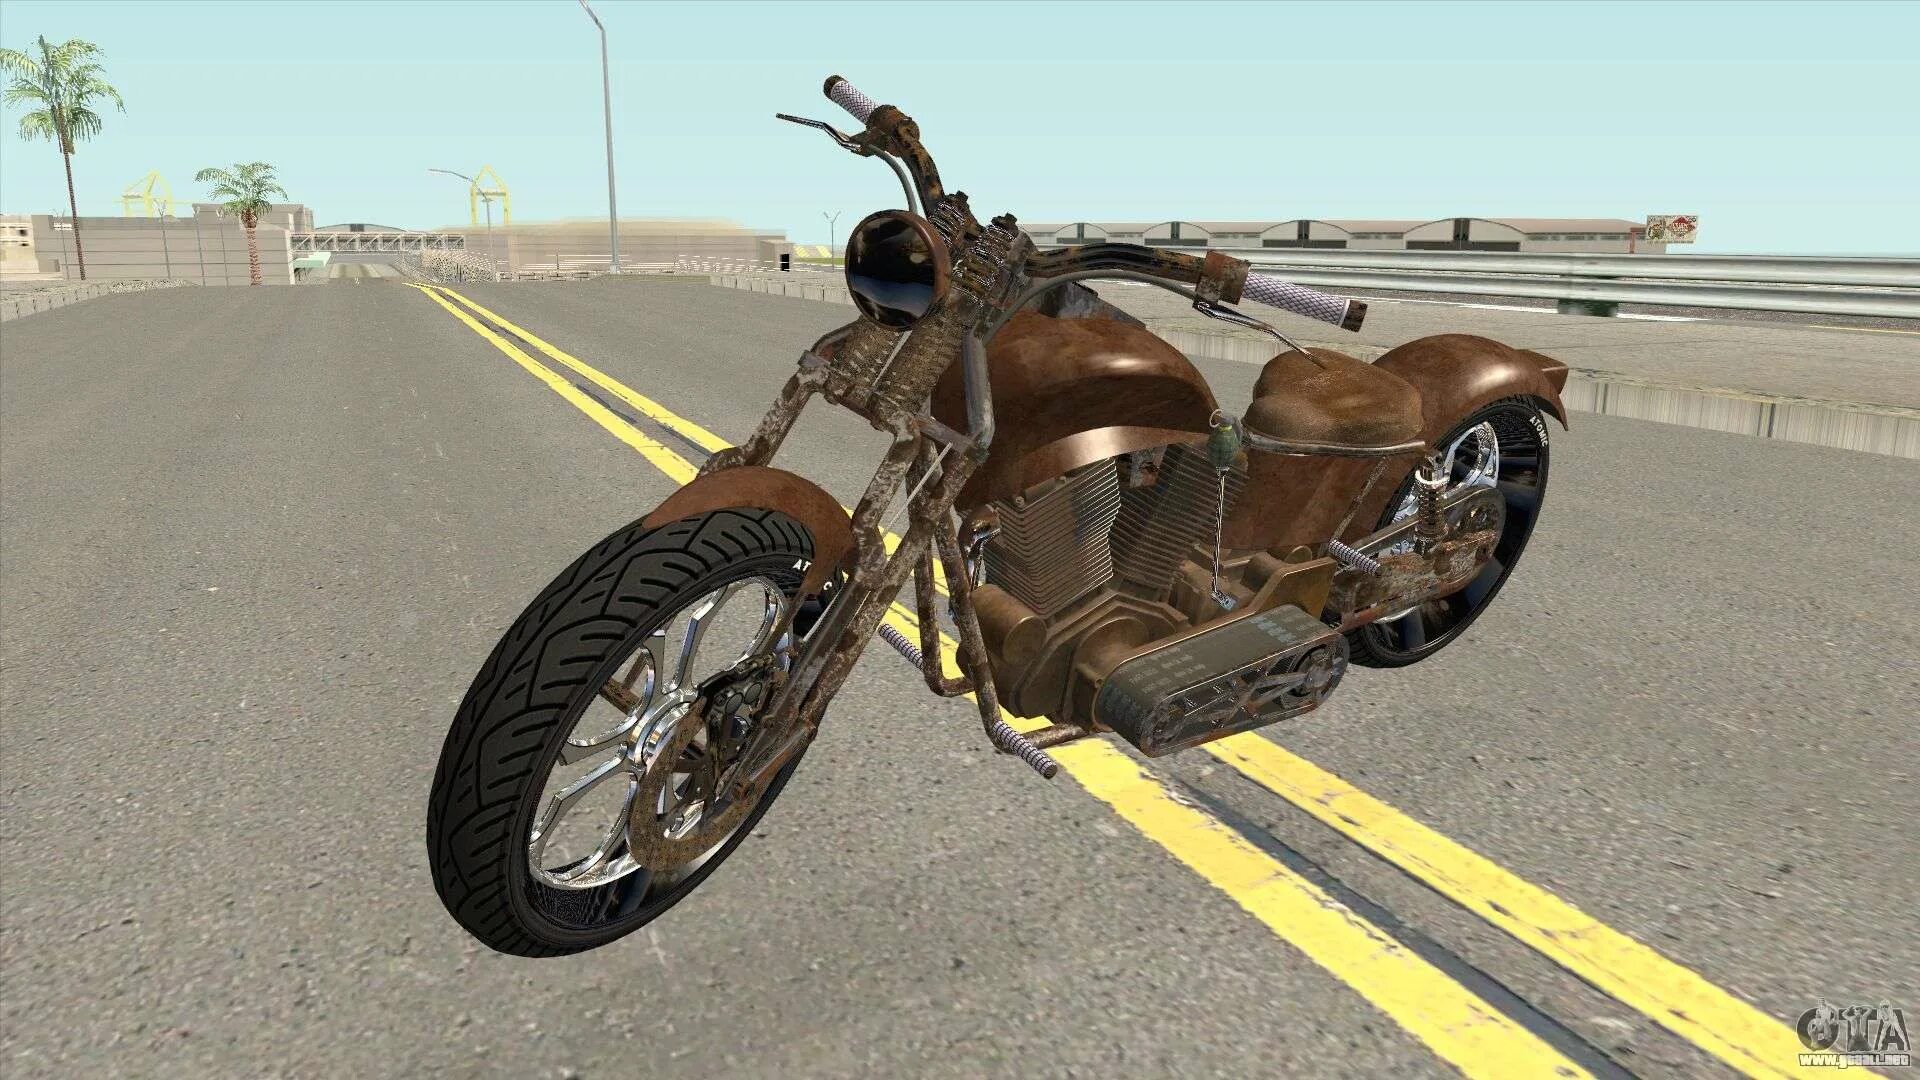 Rat Bike GTA 5. GTA San Andreas мотоциклы. Мотоцикл ГТА 5 Сан андреас. ГТА Сан андреас баба мотоцикл. Коды сан андреас мотоциклы